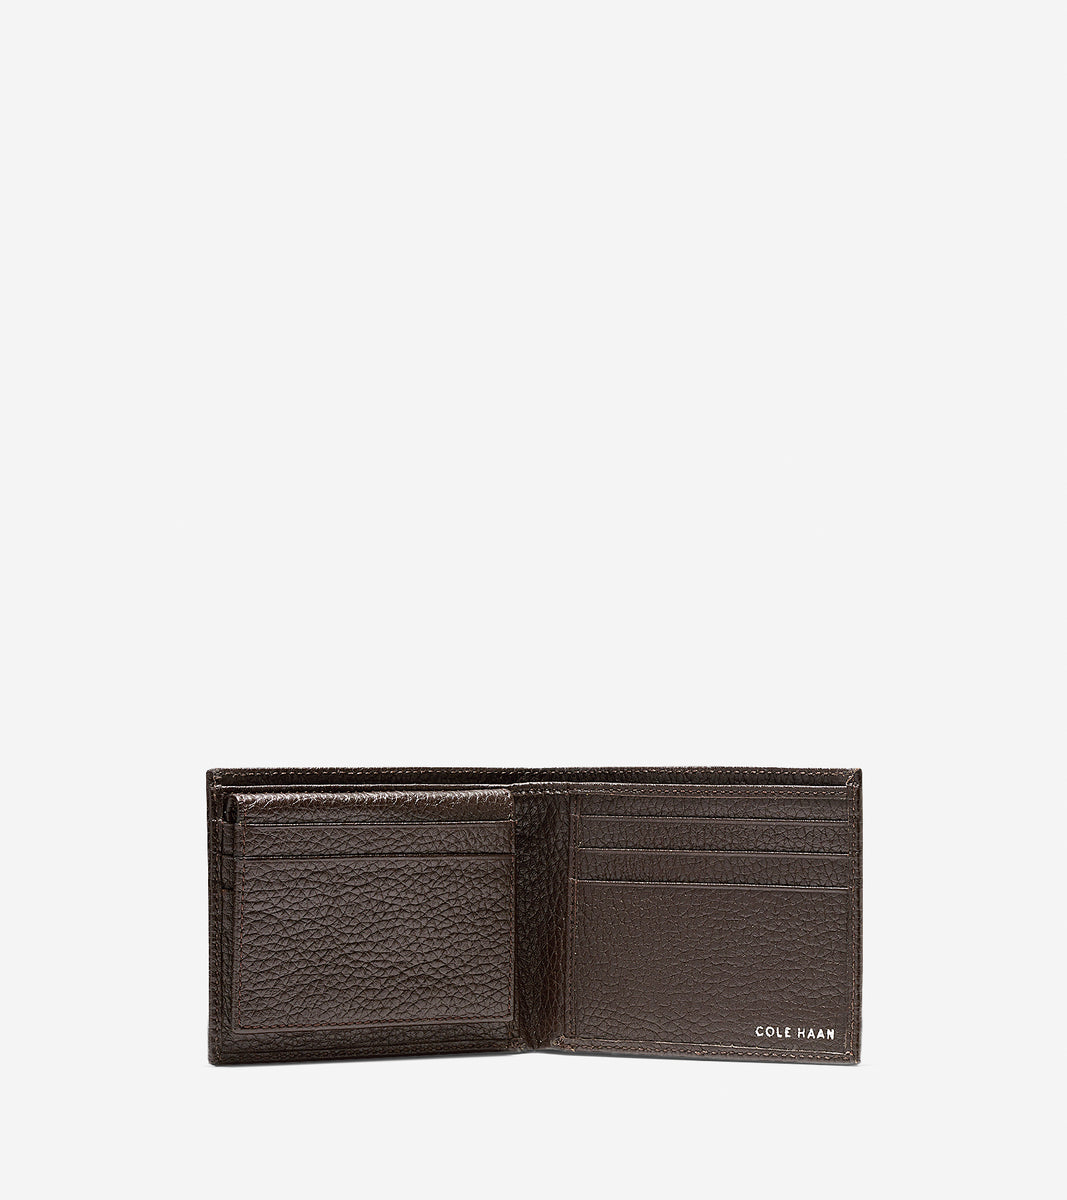 ColeHaan-Wayland Billfold With Passcase Wallet-f10094-Chocolate